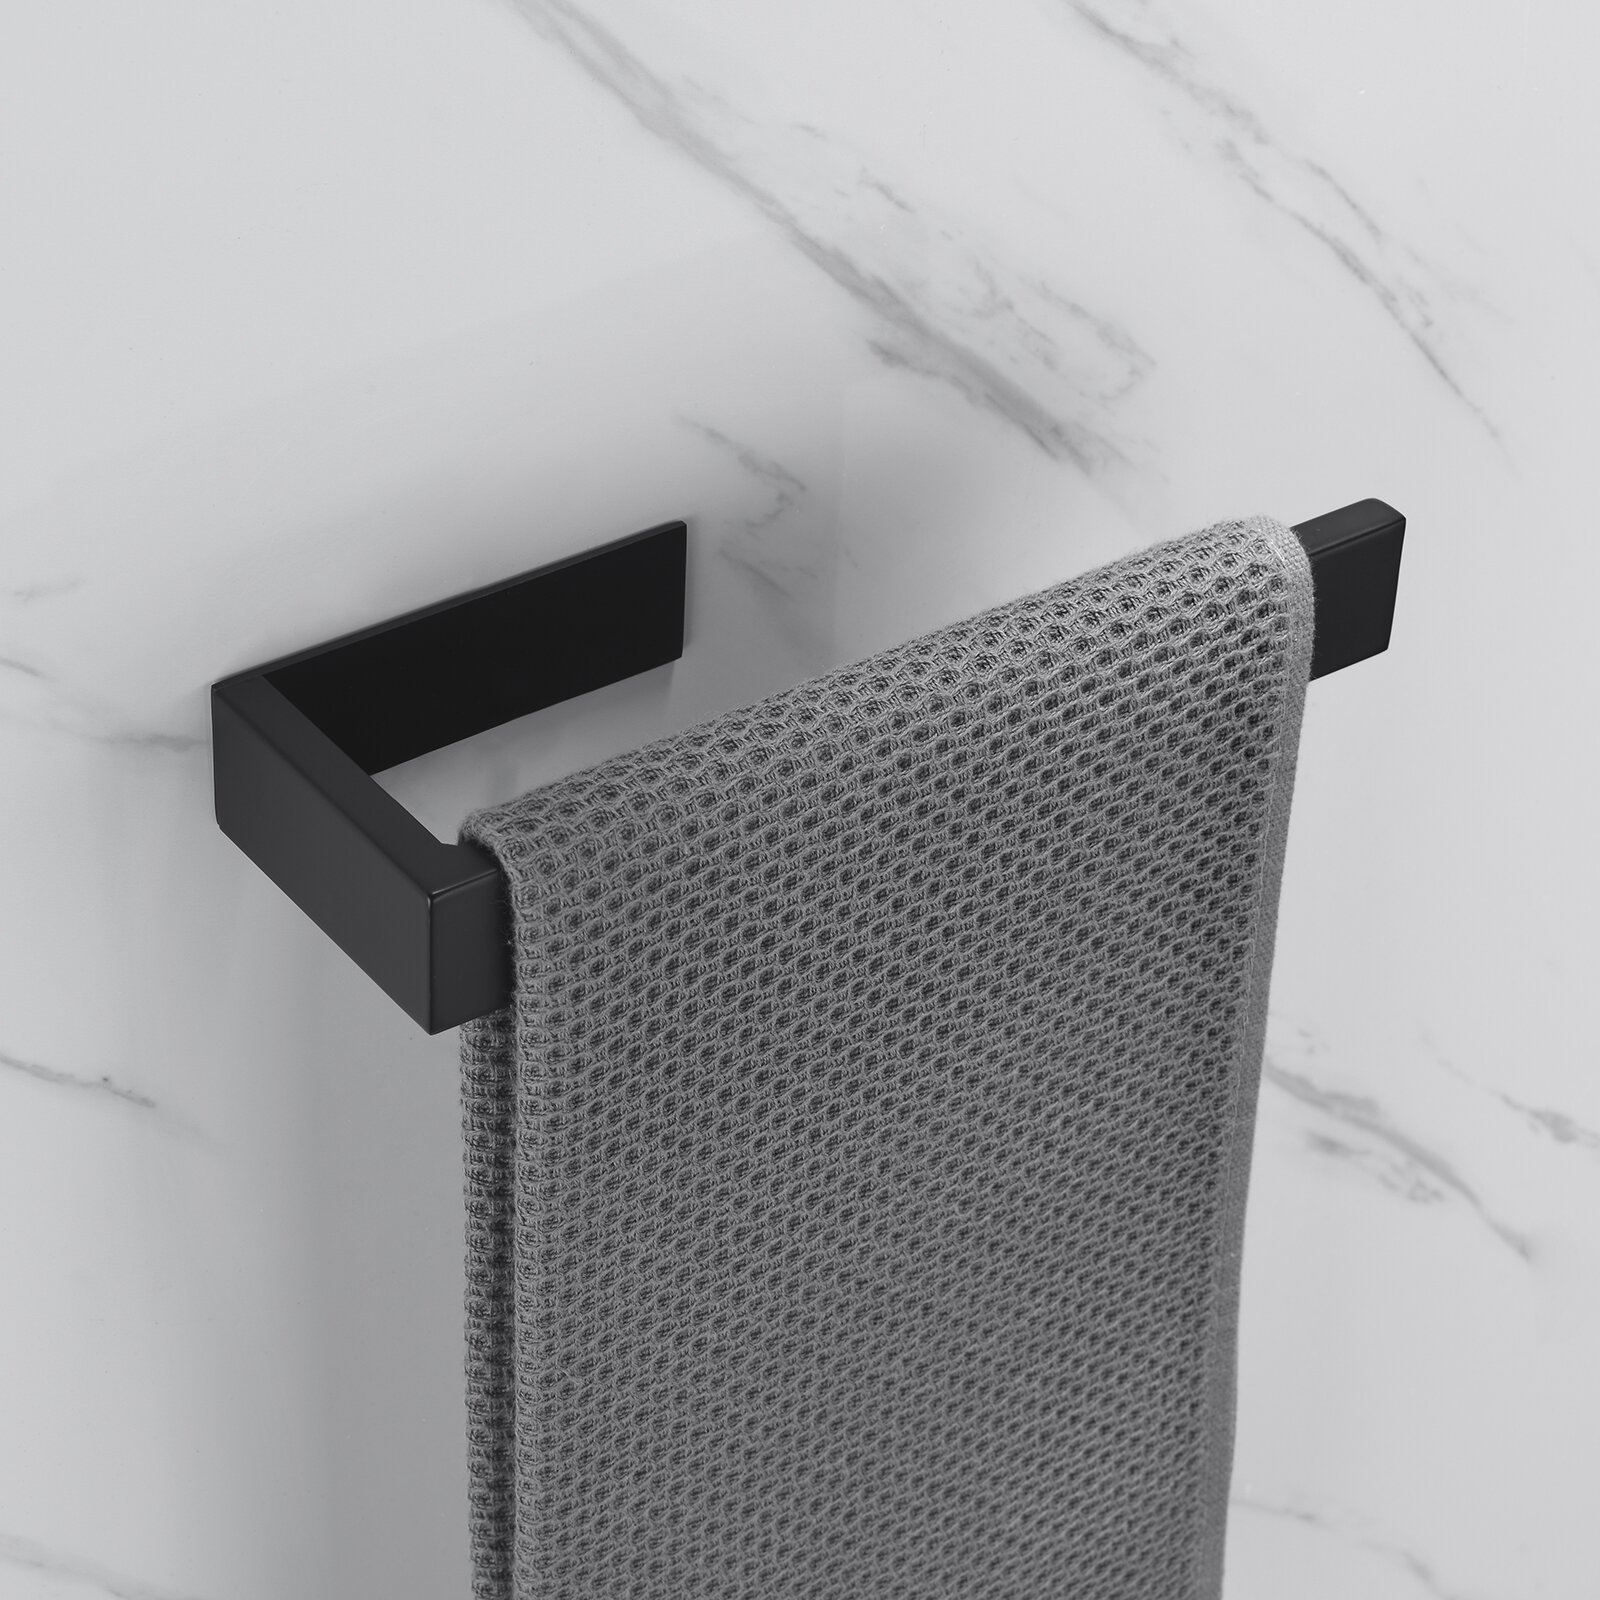 High Quality SUS304 Stainless Steel Bathroom Hardware Set Robe Hook Towel Rail Rack Bathroom Accessories